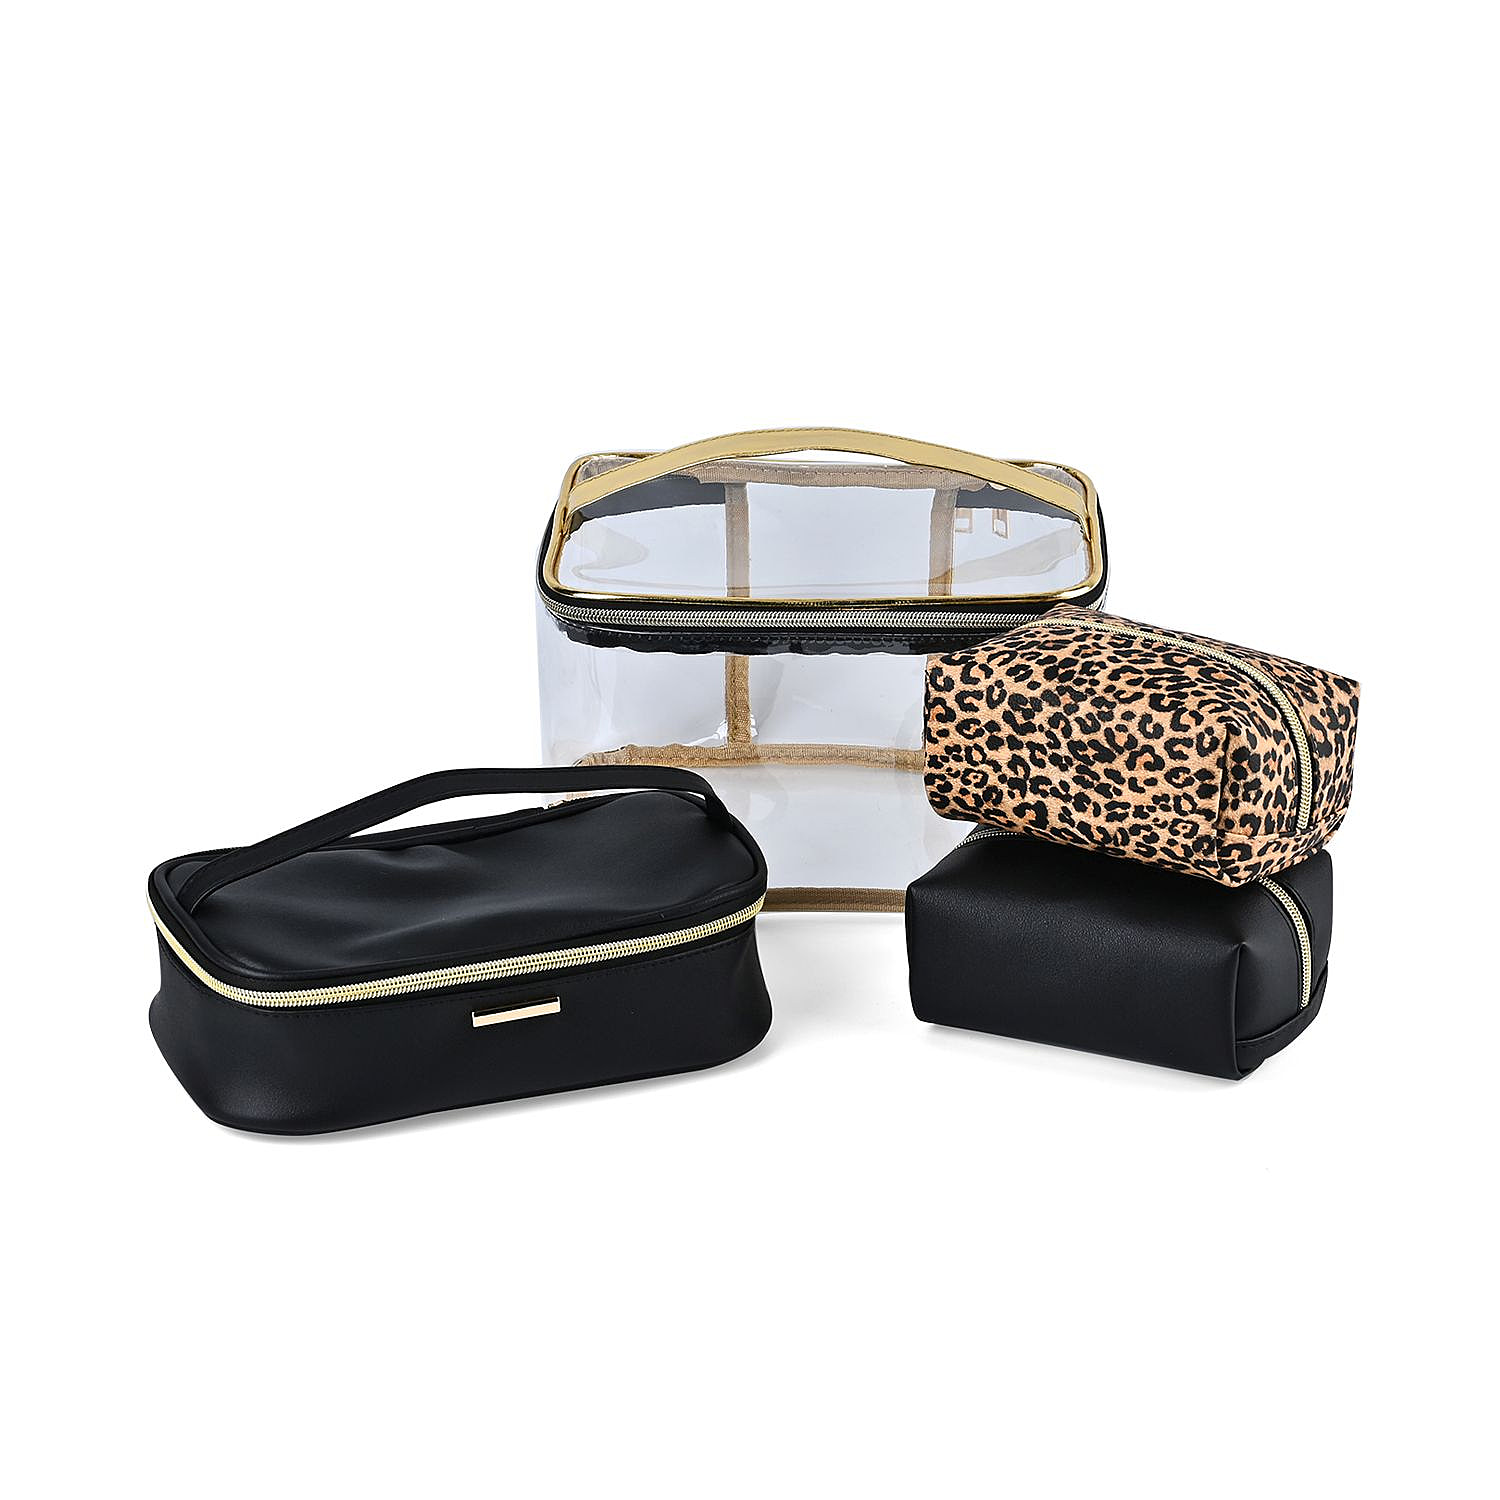 Set of 4 Leatherette Cosmetic Bag (Size L,M,S) - Black & Leopard